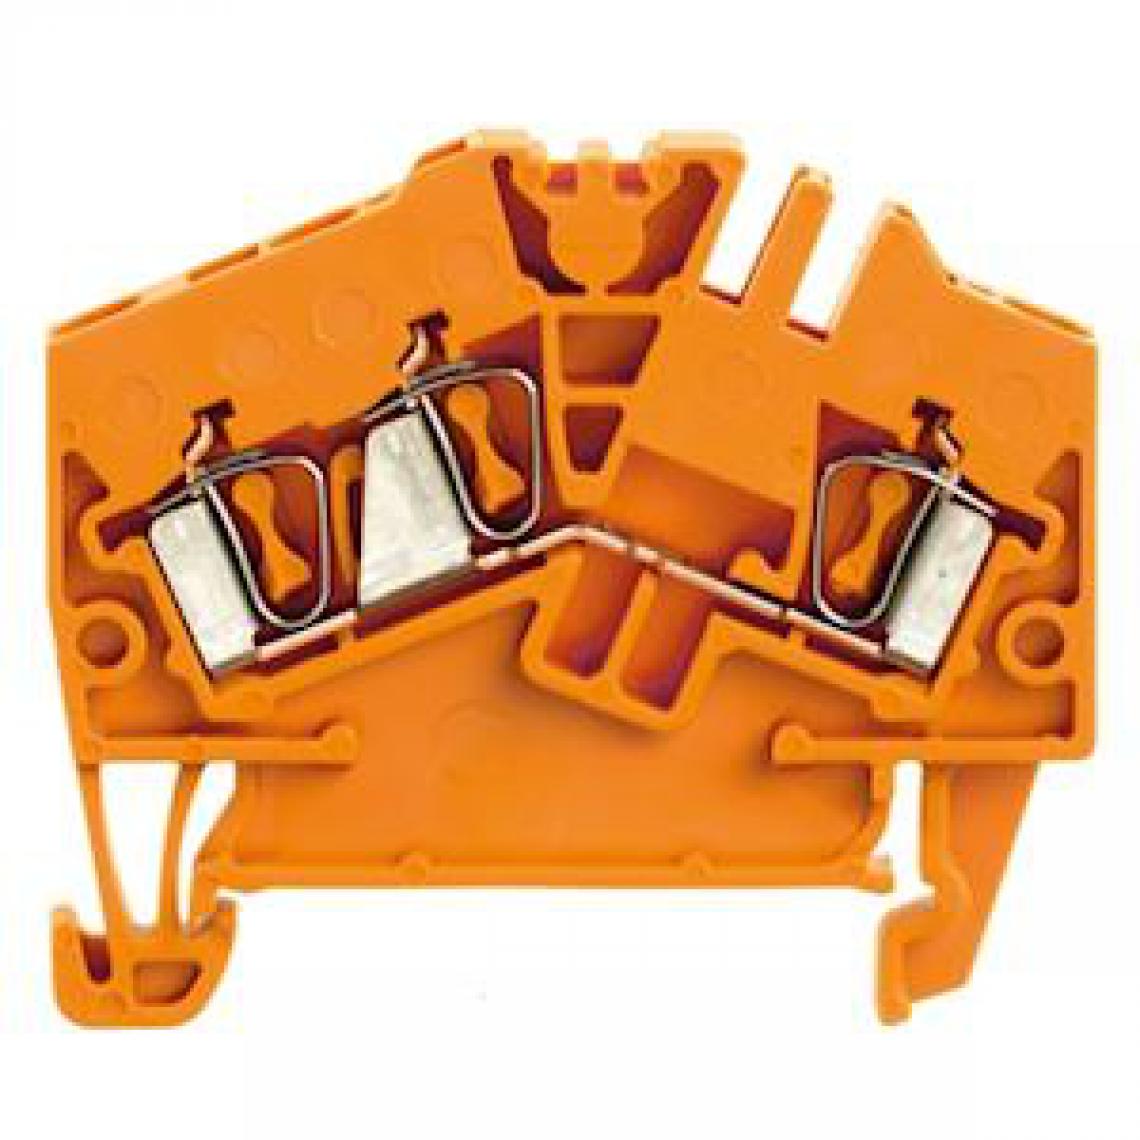 Weidmuller - bloc de jonction - passage - a ressort - zdu - 2.5 mm2 - 800 v - 24a - orange - weidmuller 1706050000 - Autres équipements modulaires